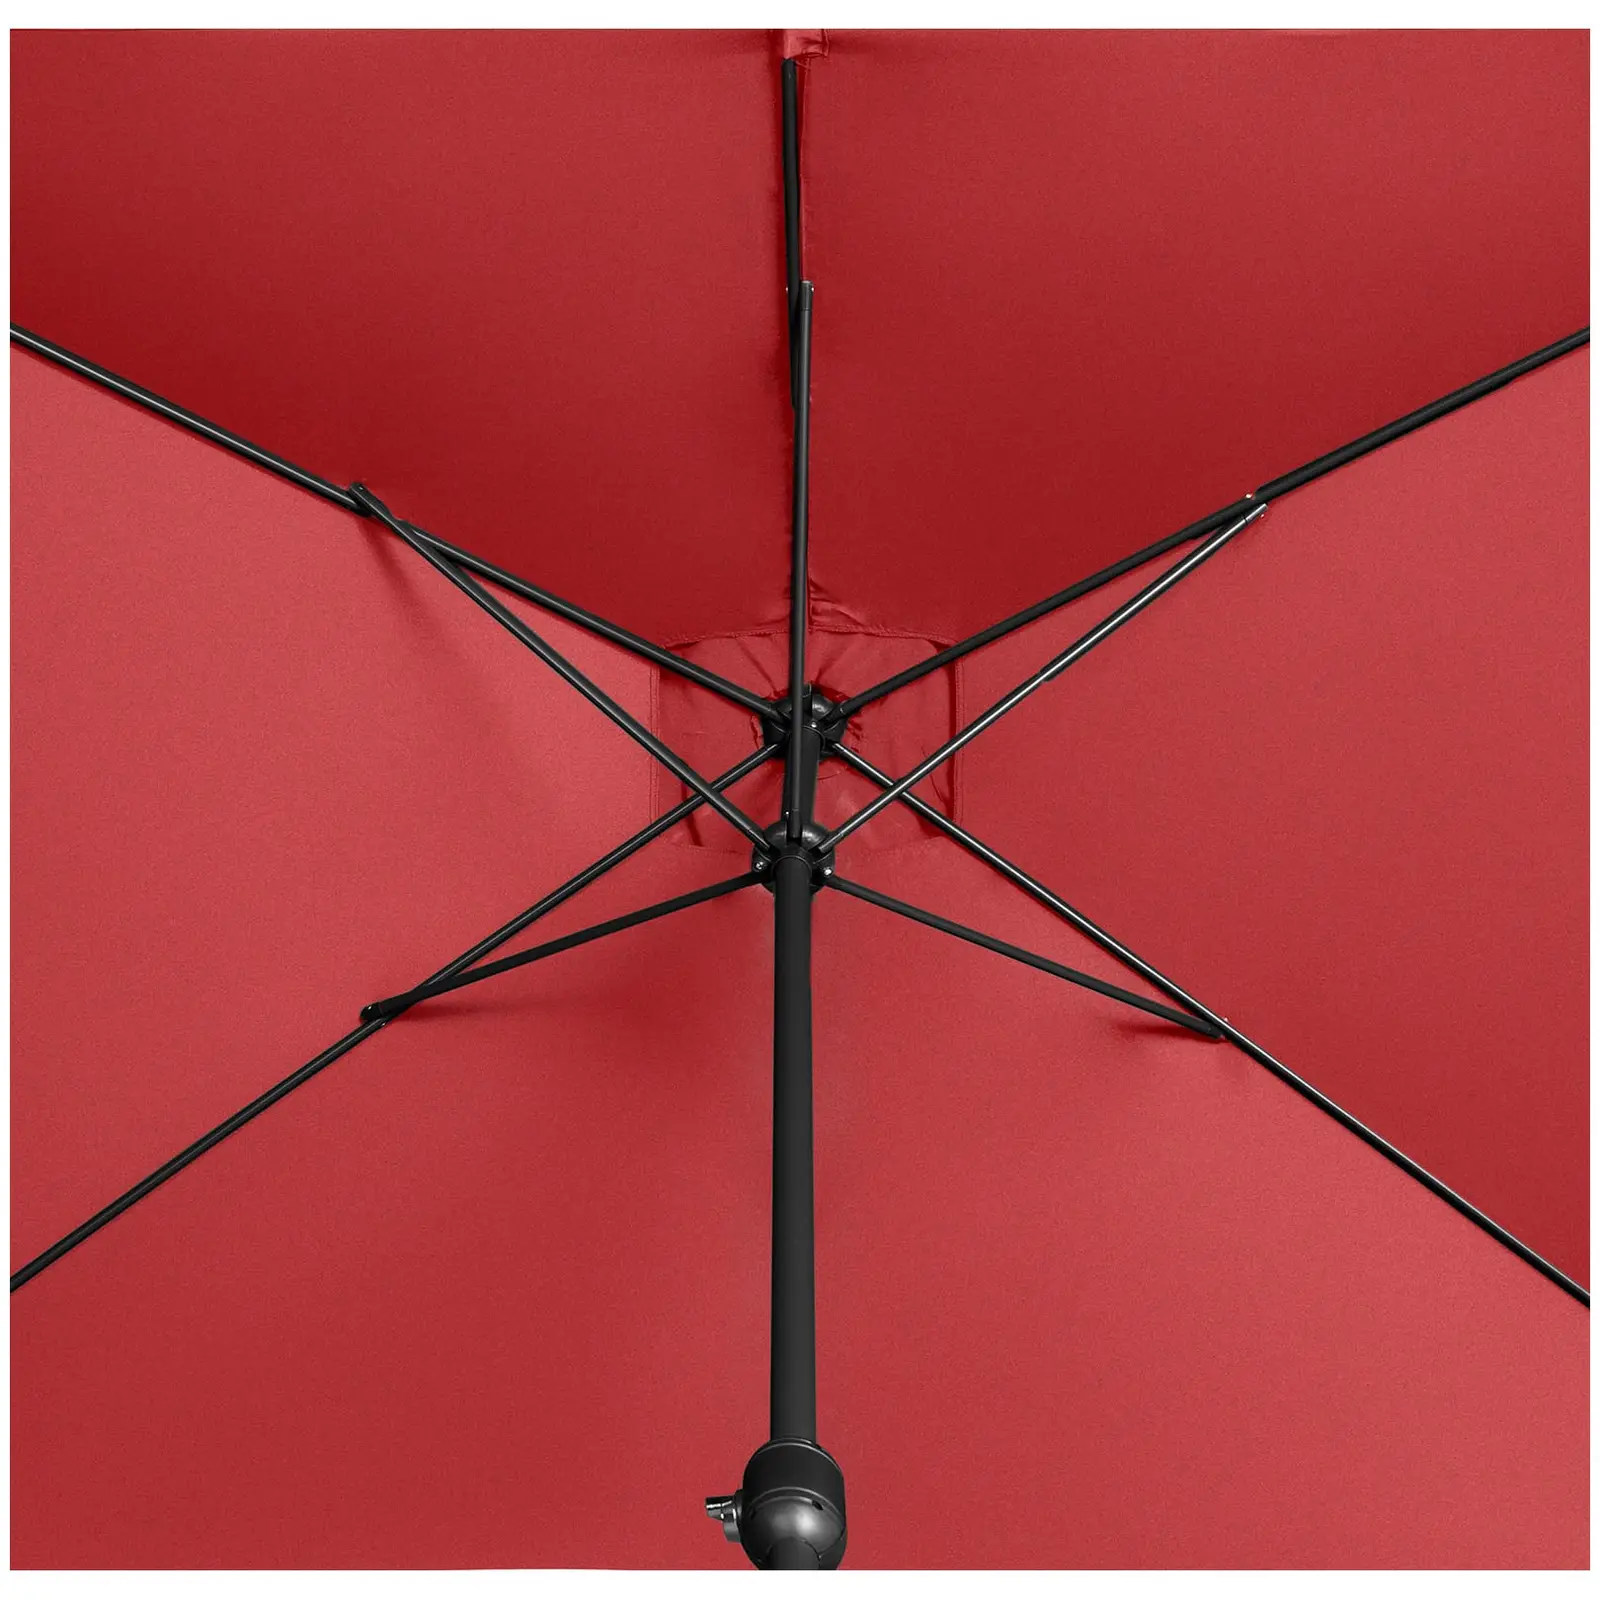 Factory second Large Outdoor Umbrella - Bordeaux - rectangular - 200 x 300 cm